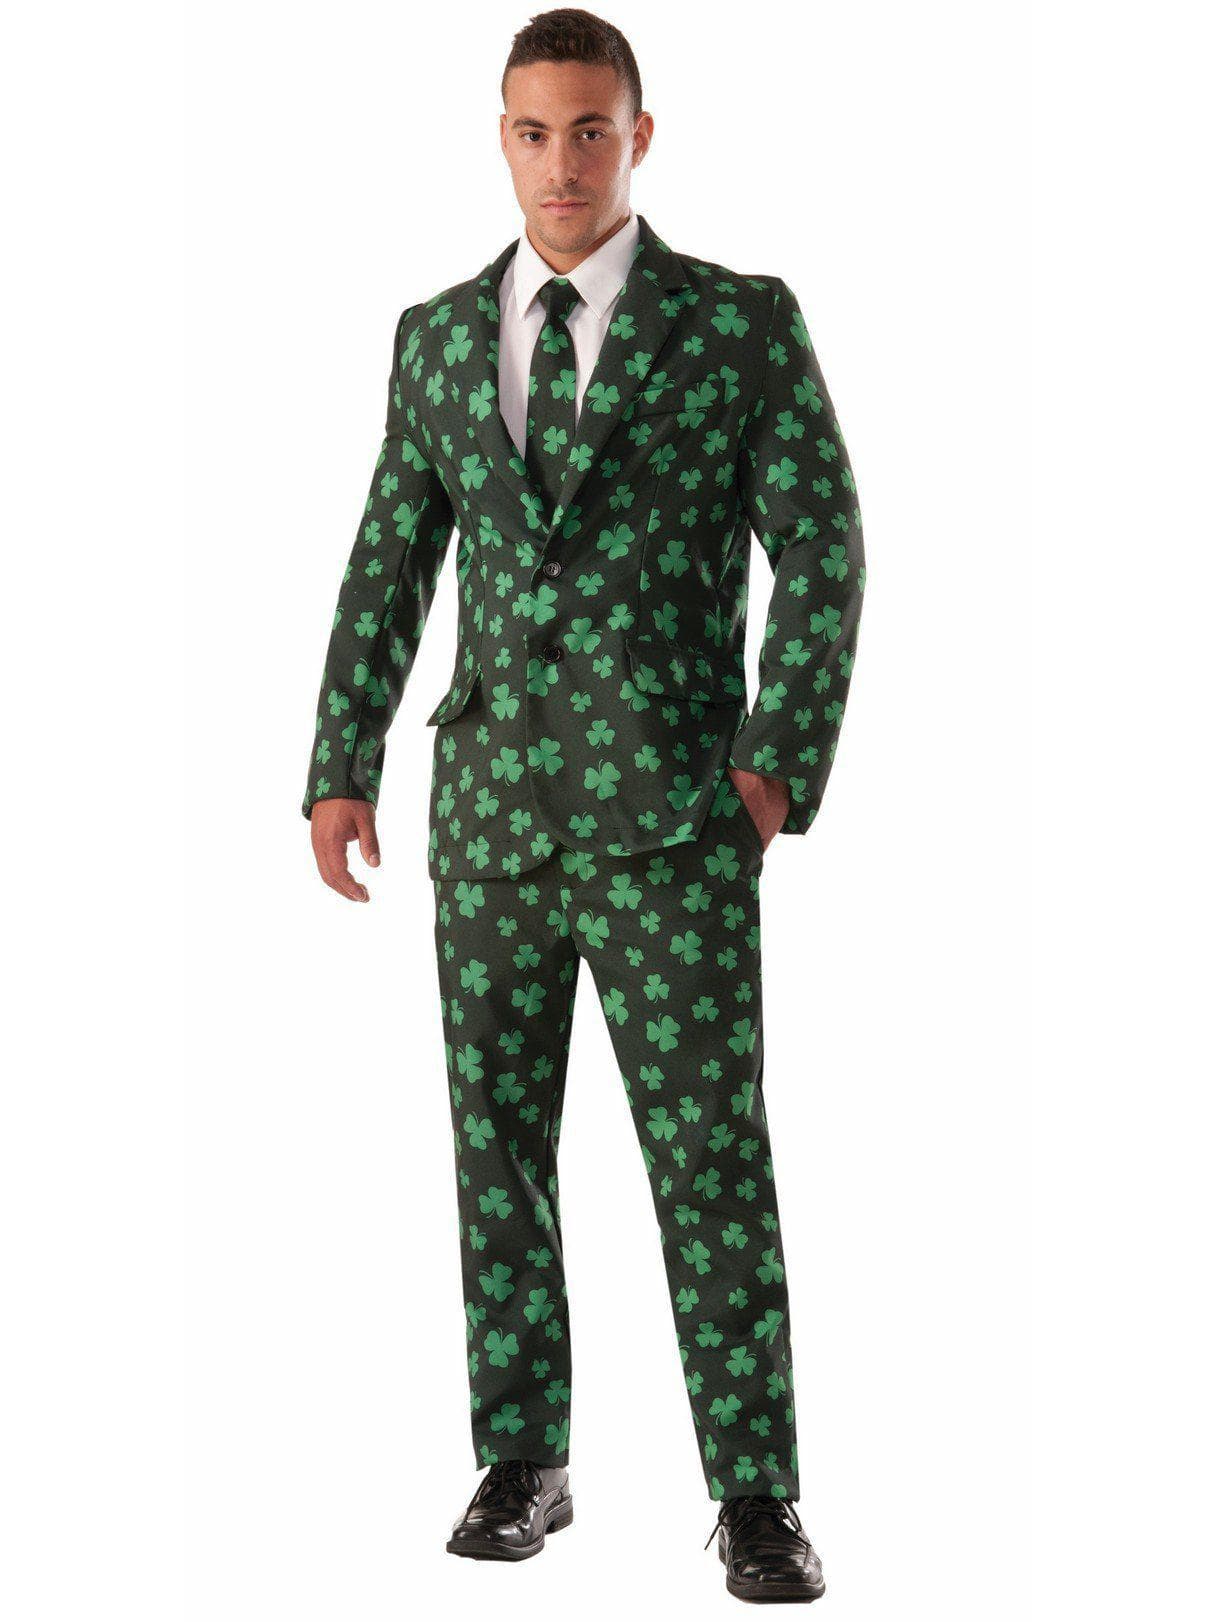 Adult Shamrock Suit & Tie Costume - costumes.com